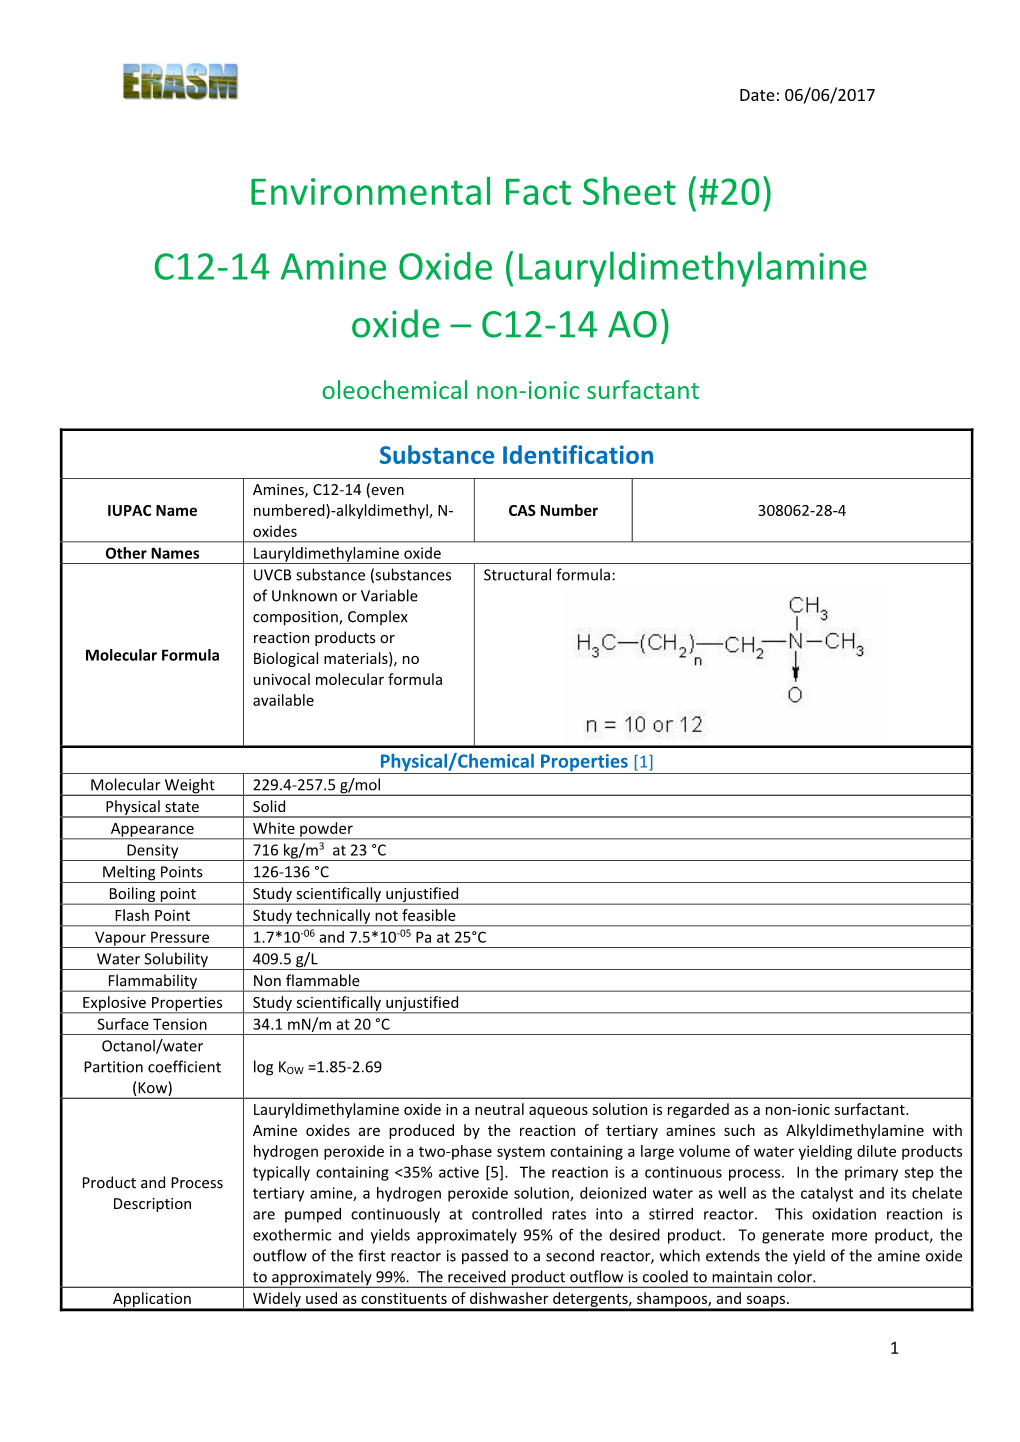 C12-14 Amine Oxide